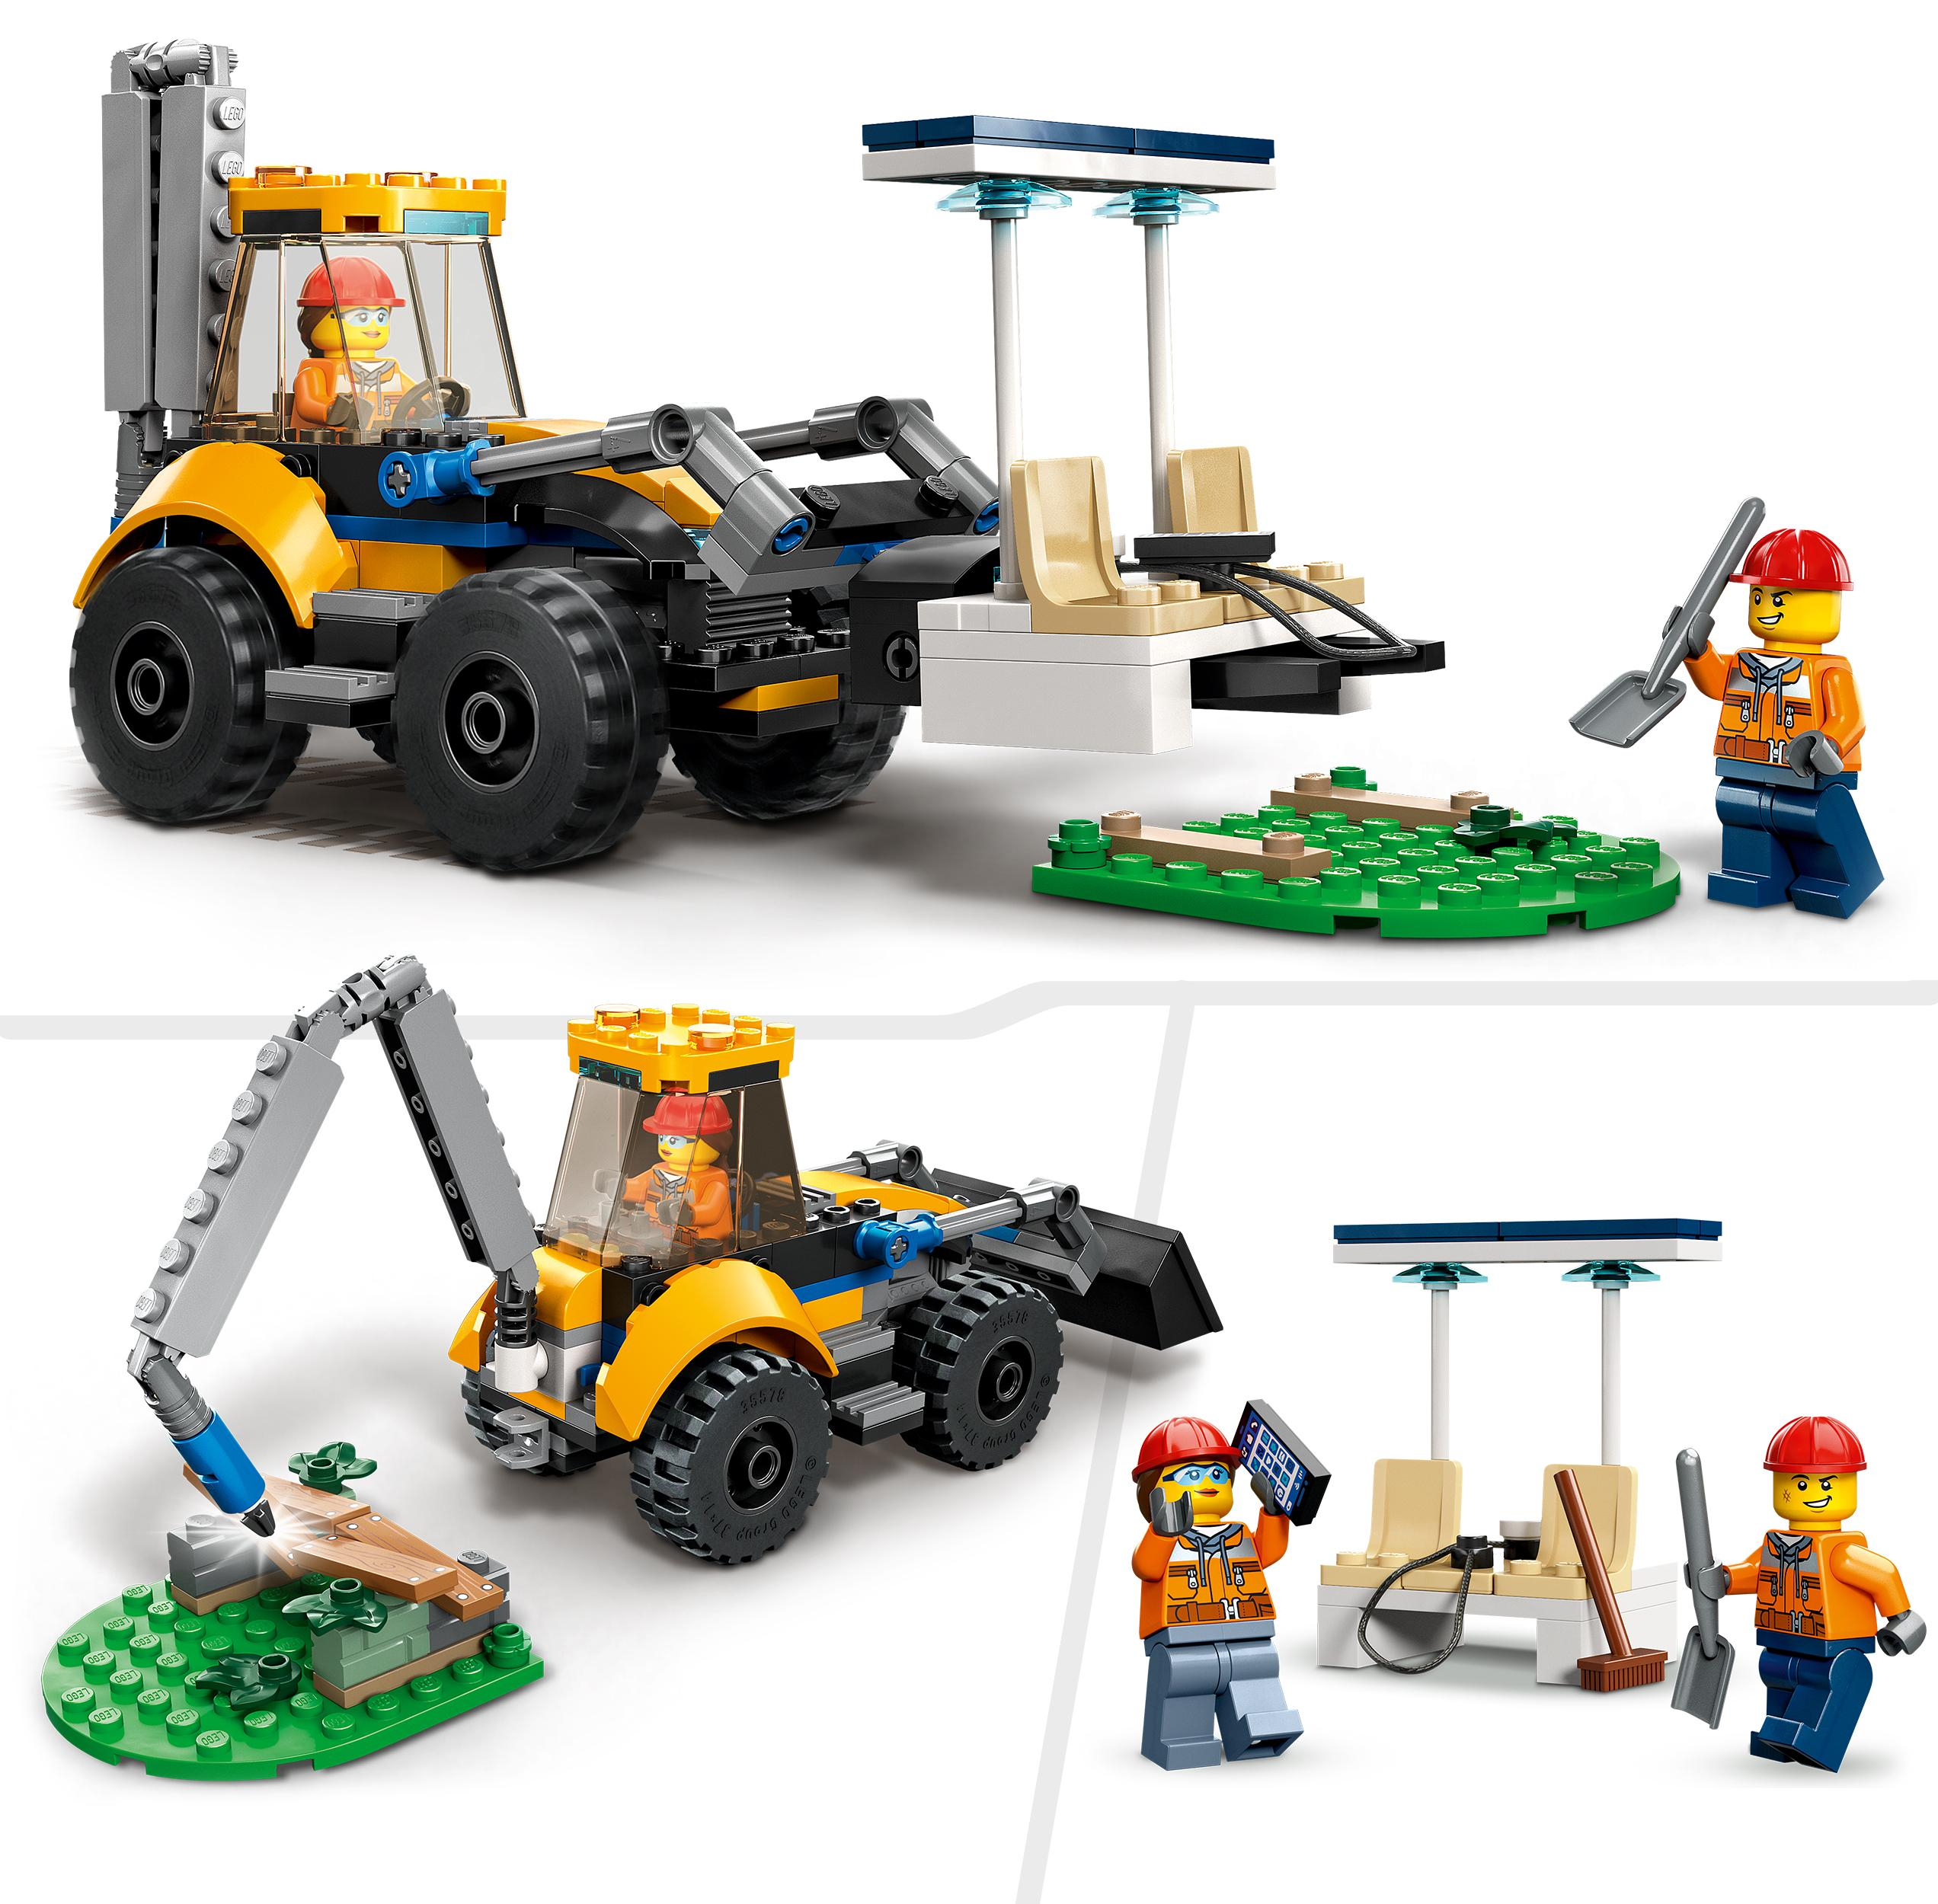 LEGO Bausatz, 60385 City Mehrfarbig Radlader